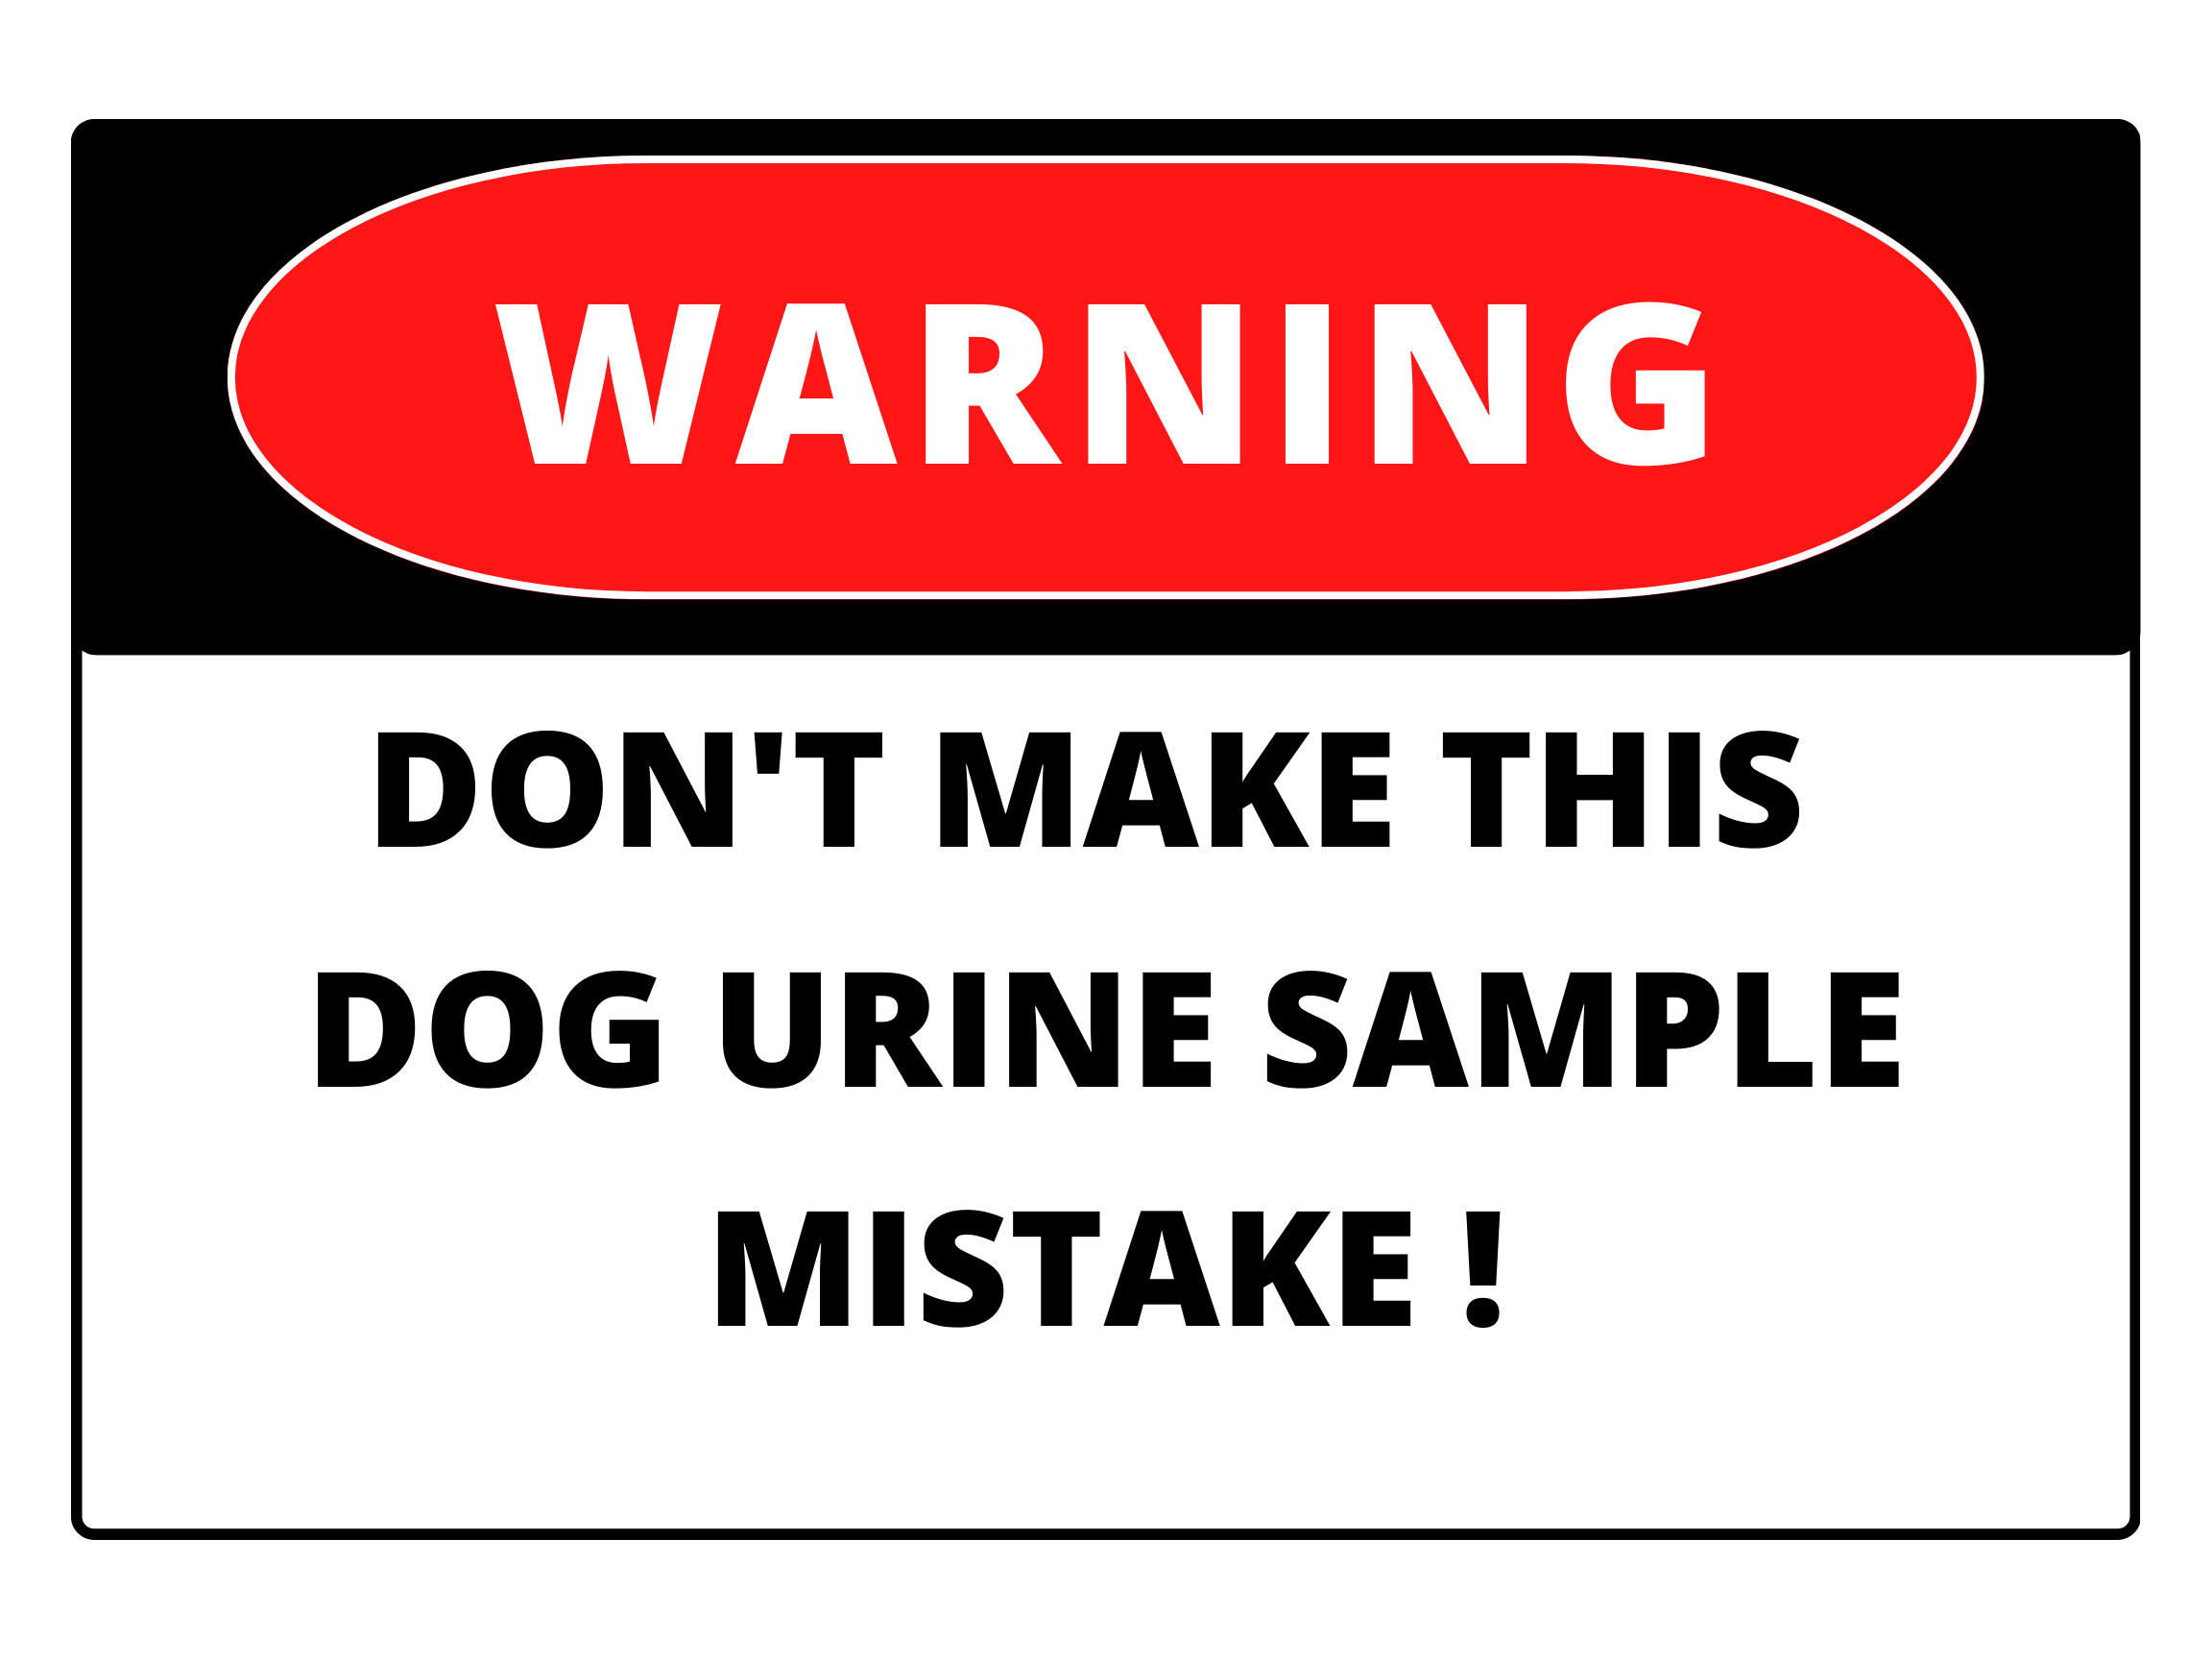 dog urine sample mistake warning graphic